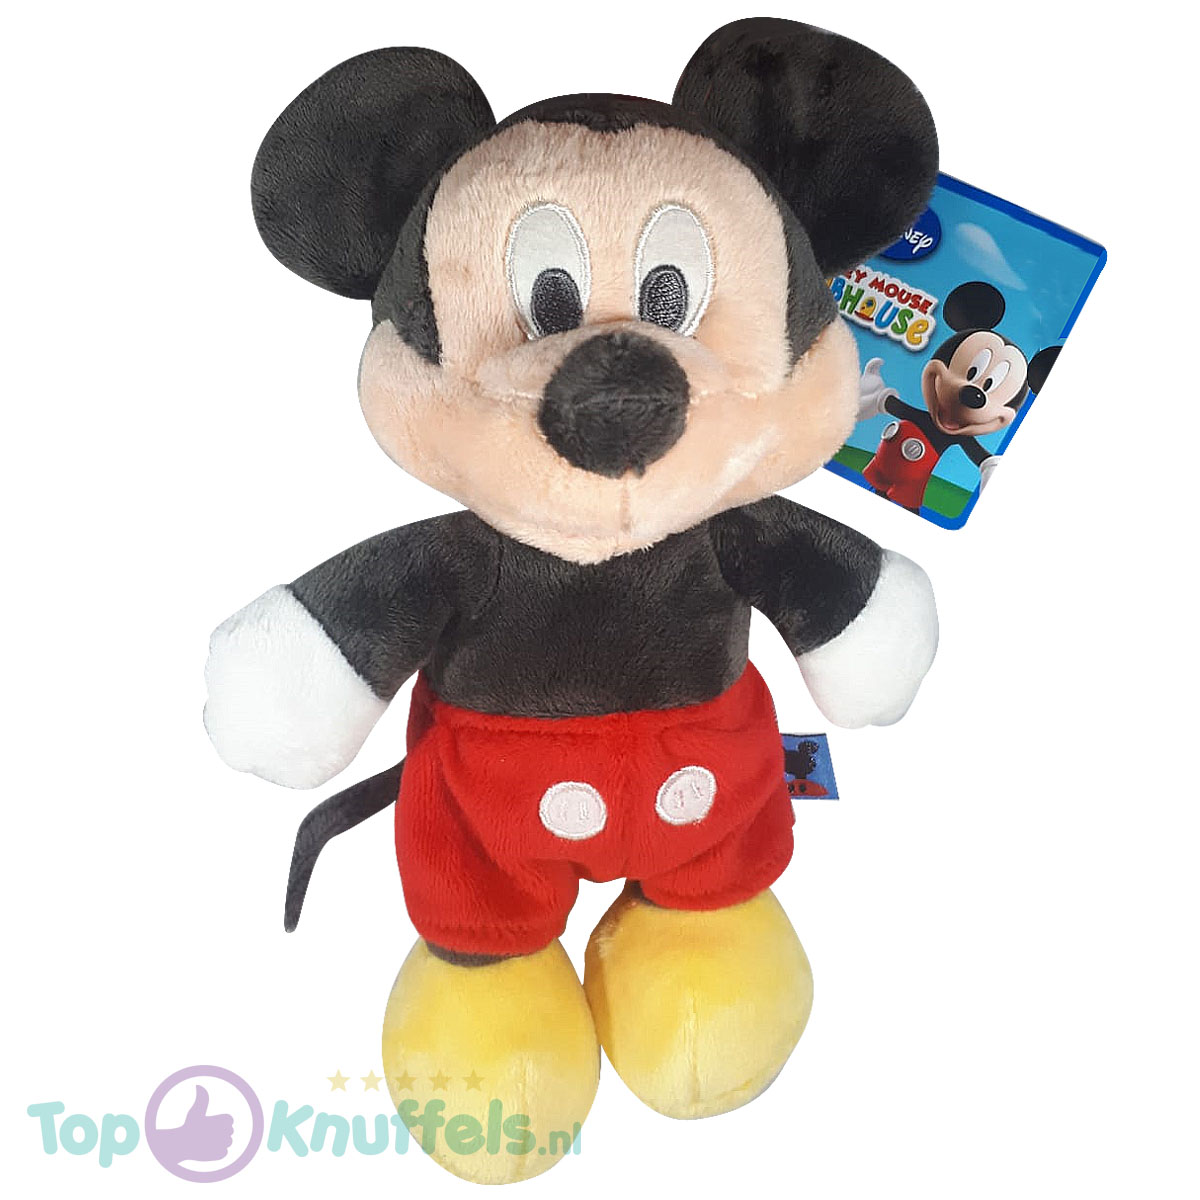 mager Robijn Kritiek Mickey Mouse pluche knuffel 24cm - Disney Clubhouse kopen?